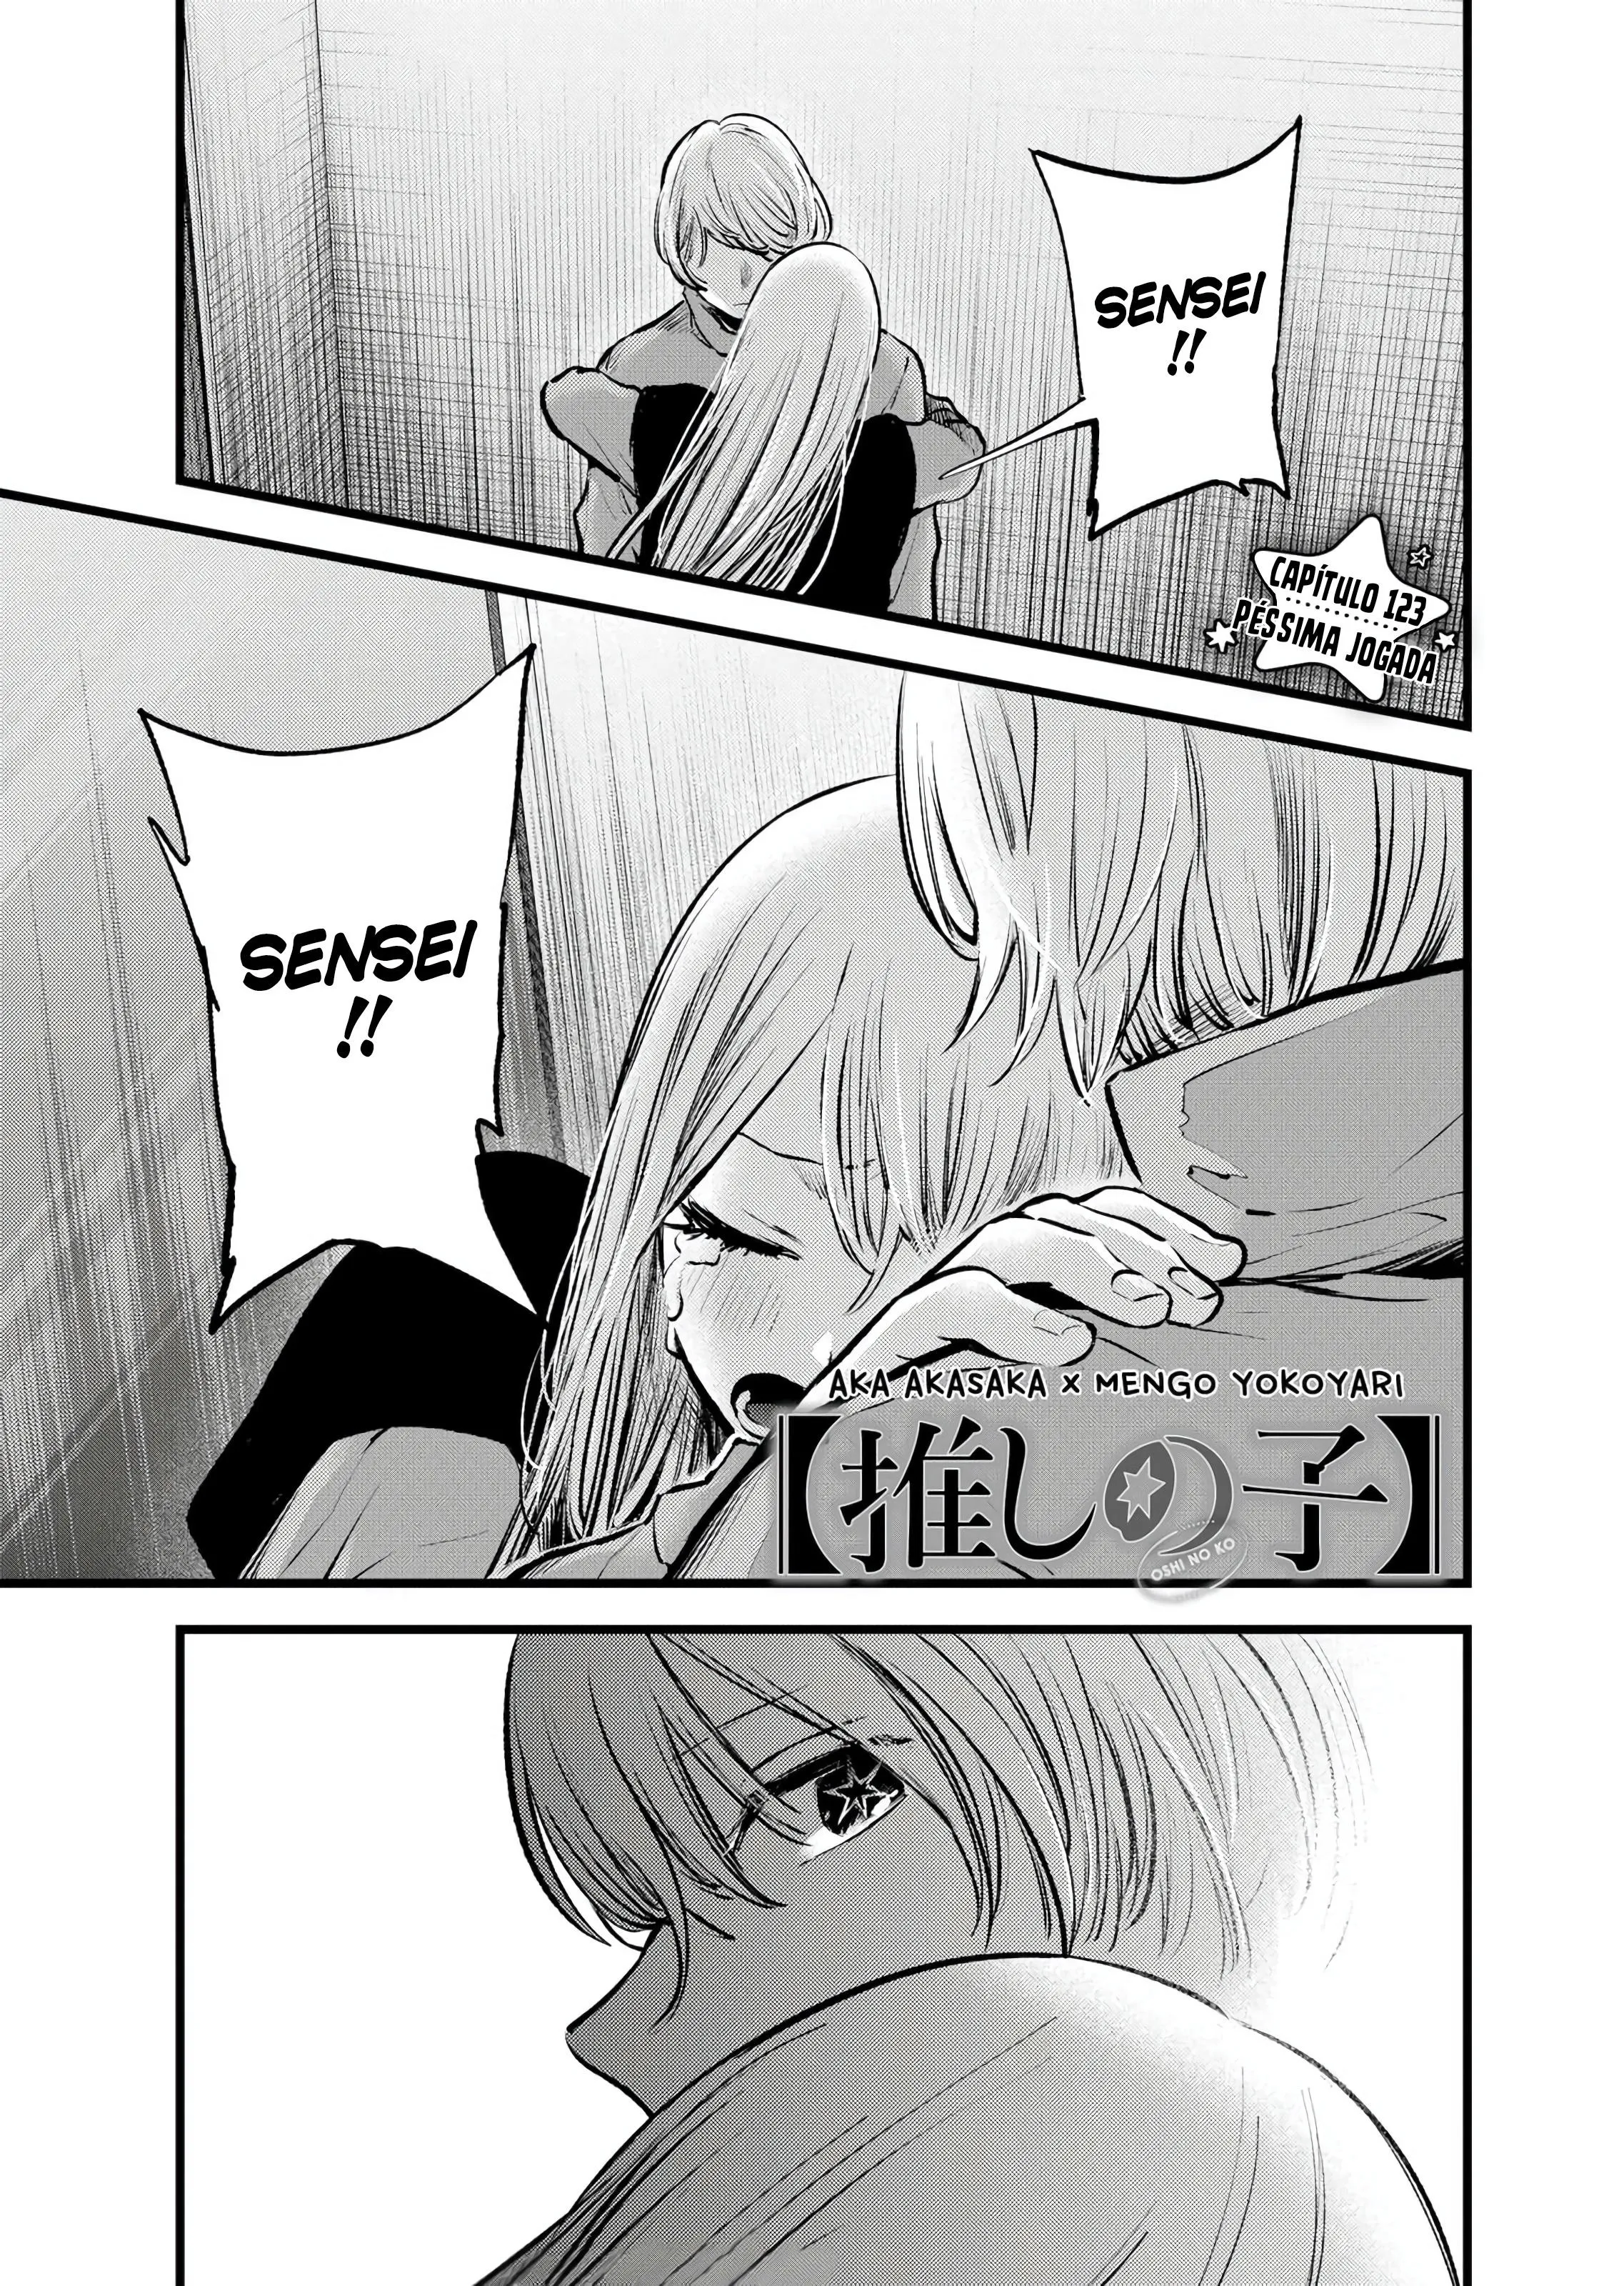 Oshi no Ko Capítulo 40 - Manga Online